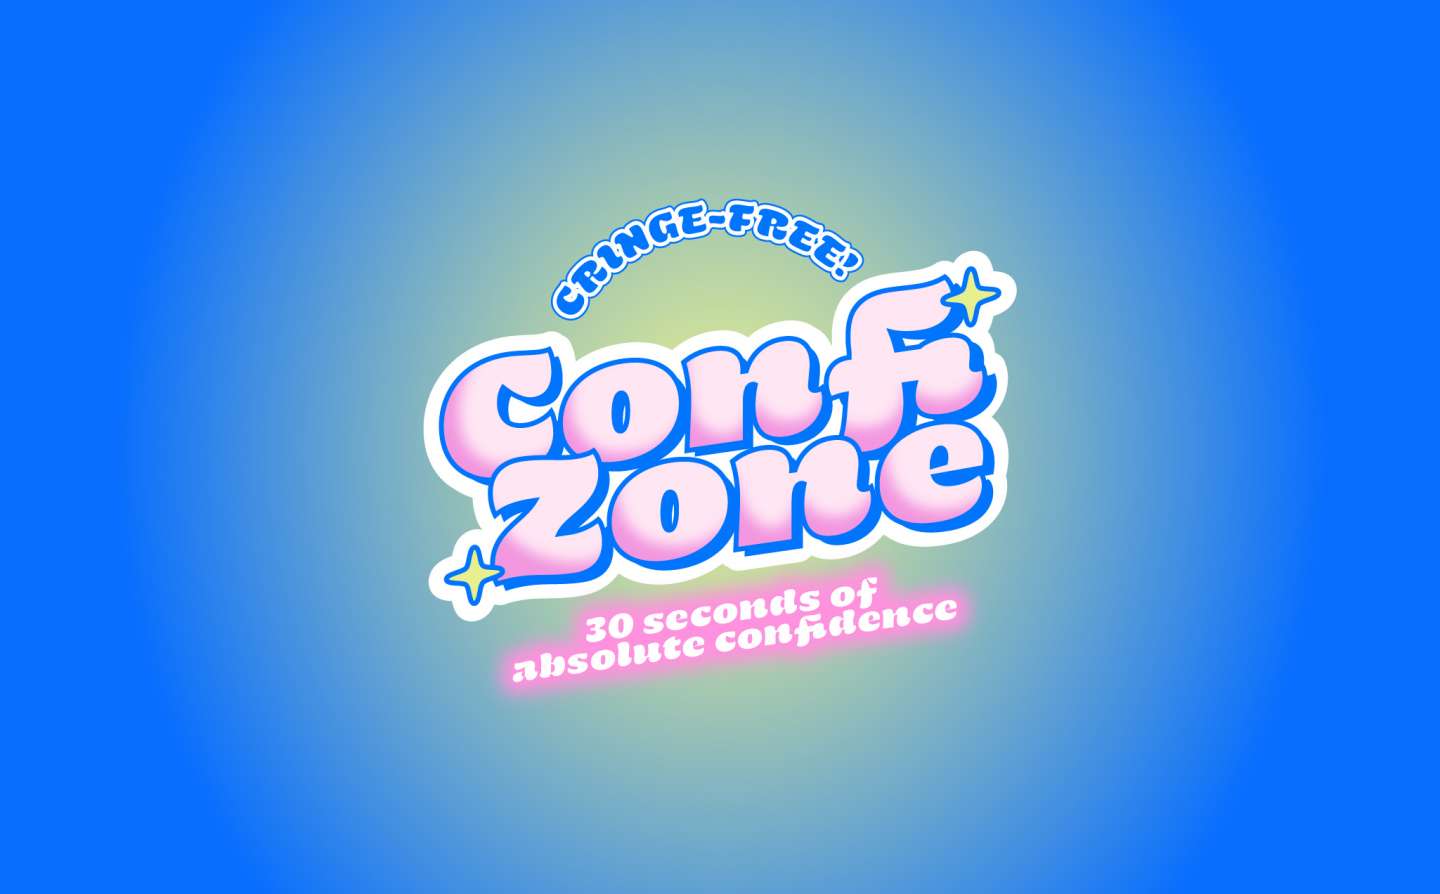 Cringe-Aid Kit: Courage Candy - Confi Zone